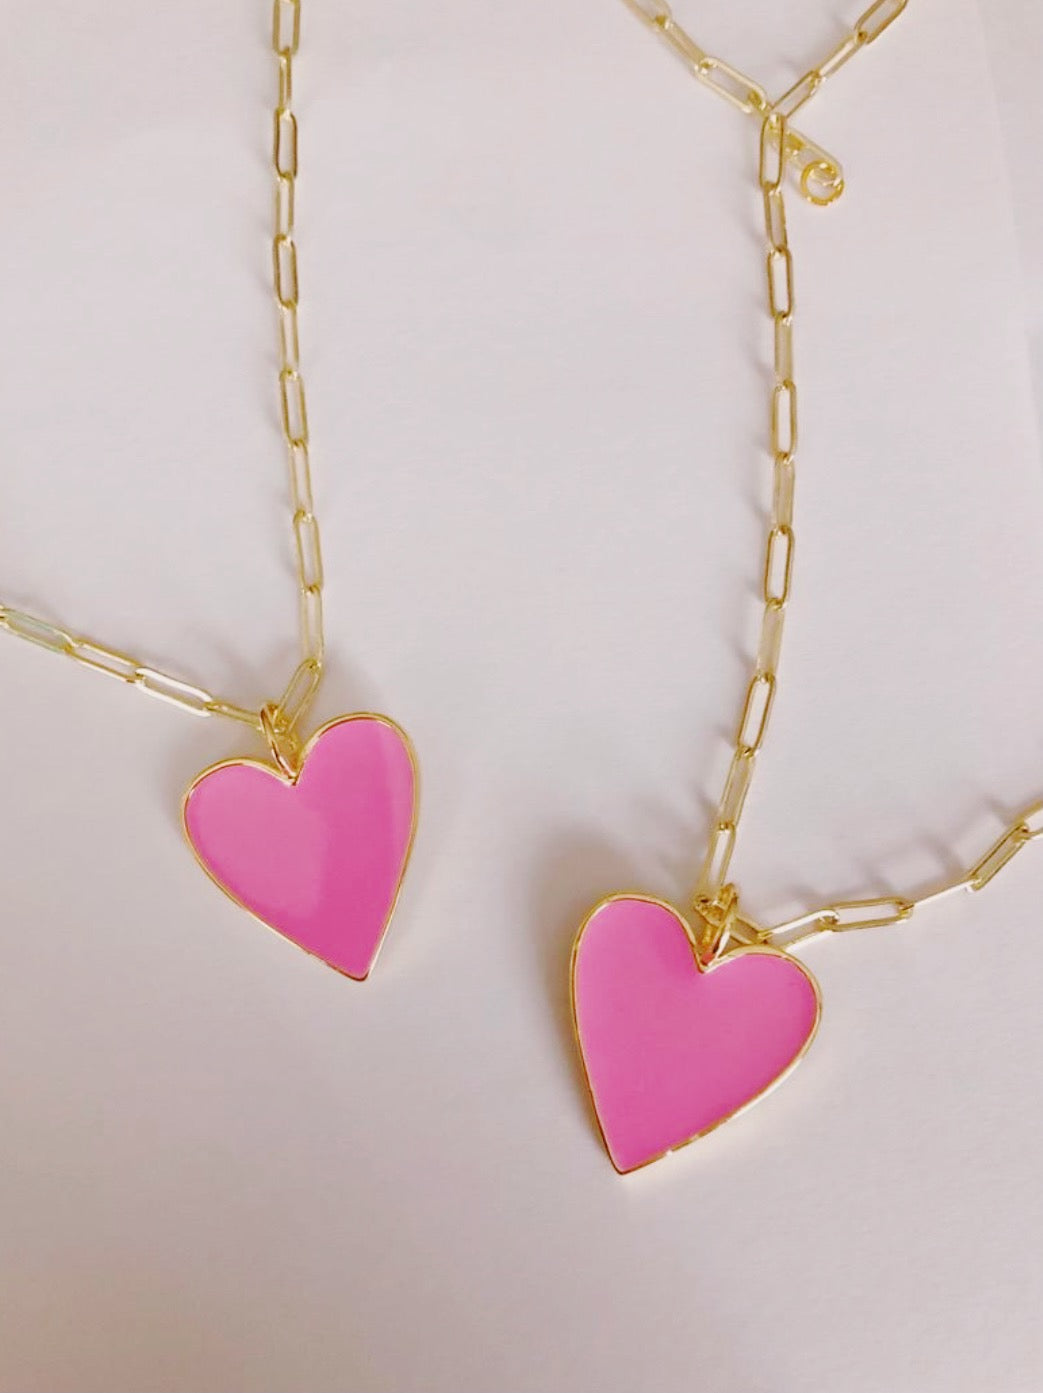 Medium “Ava” necklace